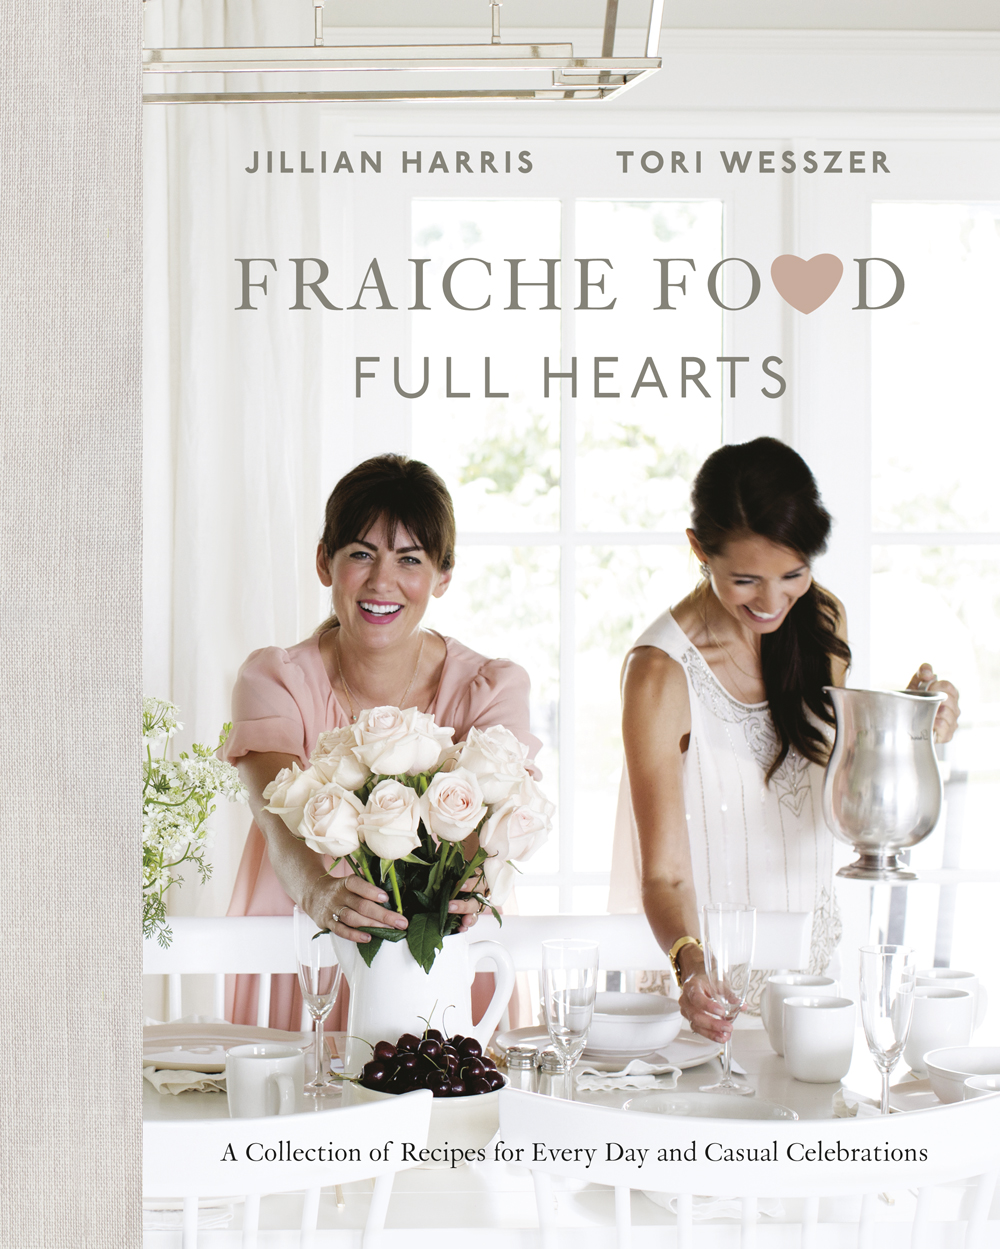 The front cover art of Jillian Harris' first cookbook